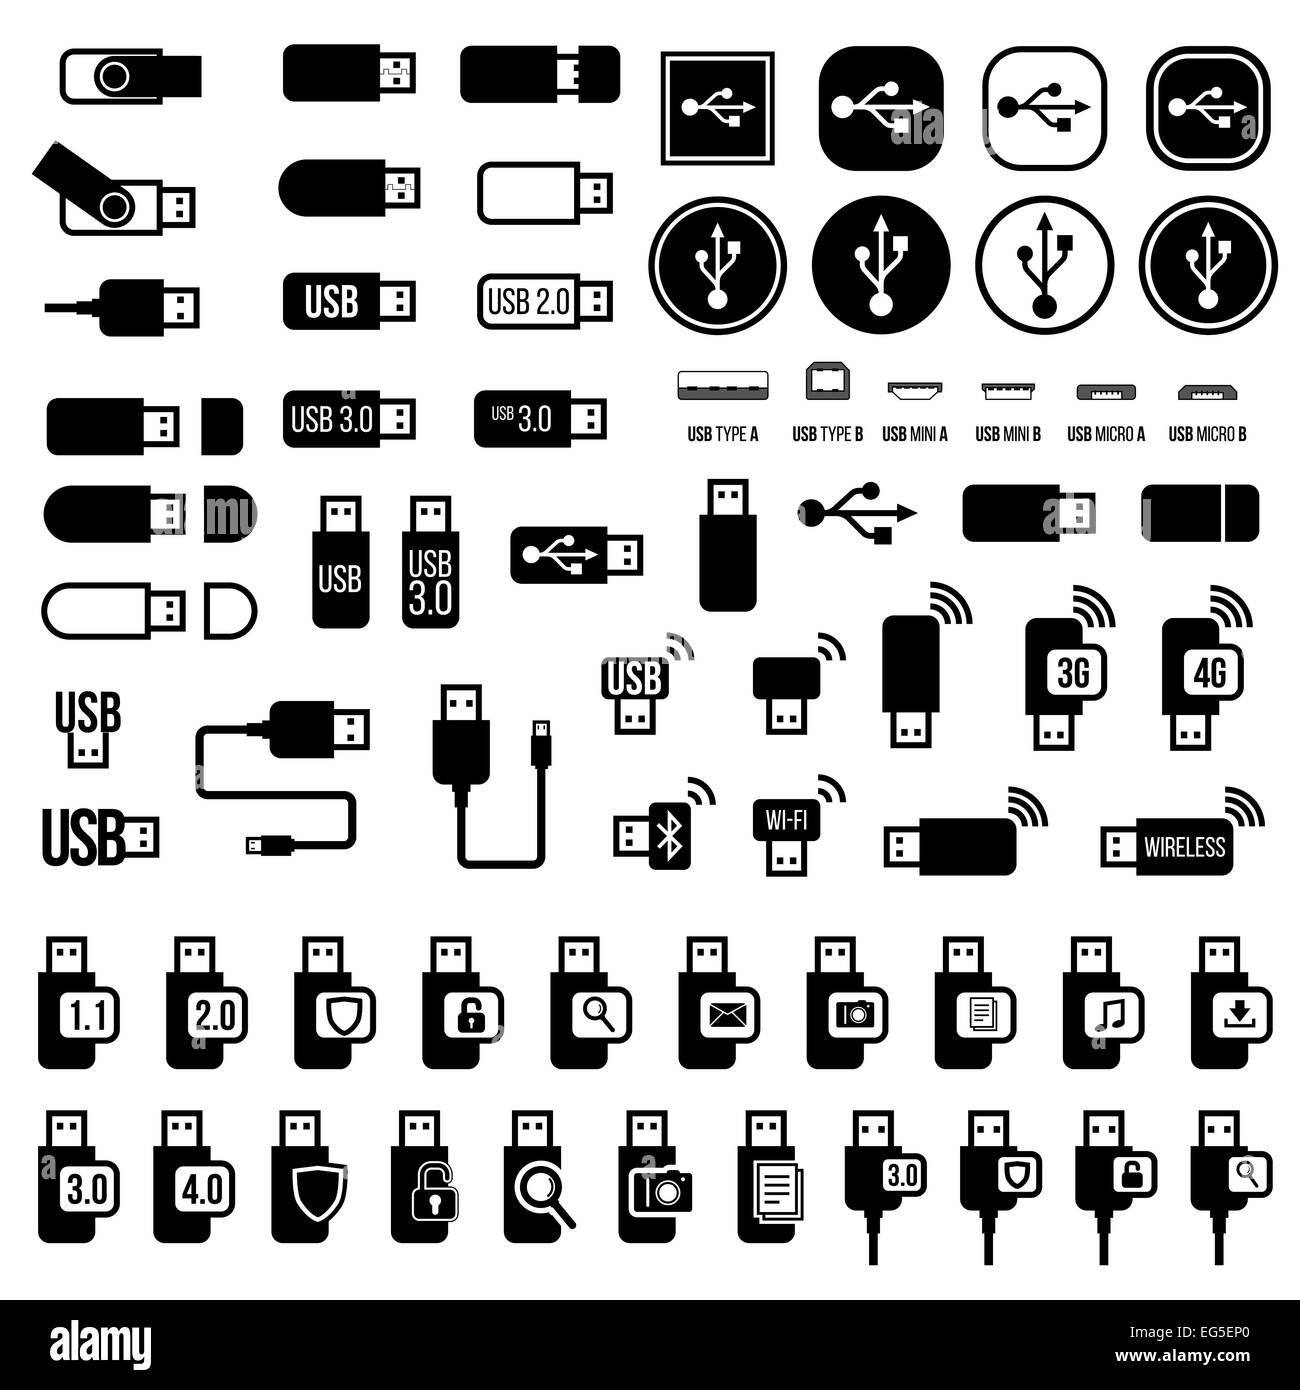 USB icons Stock Photo